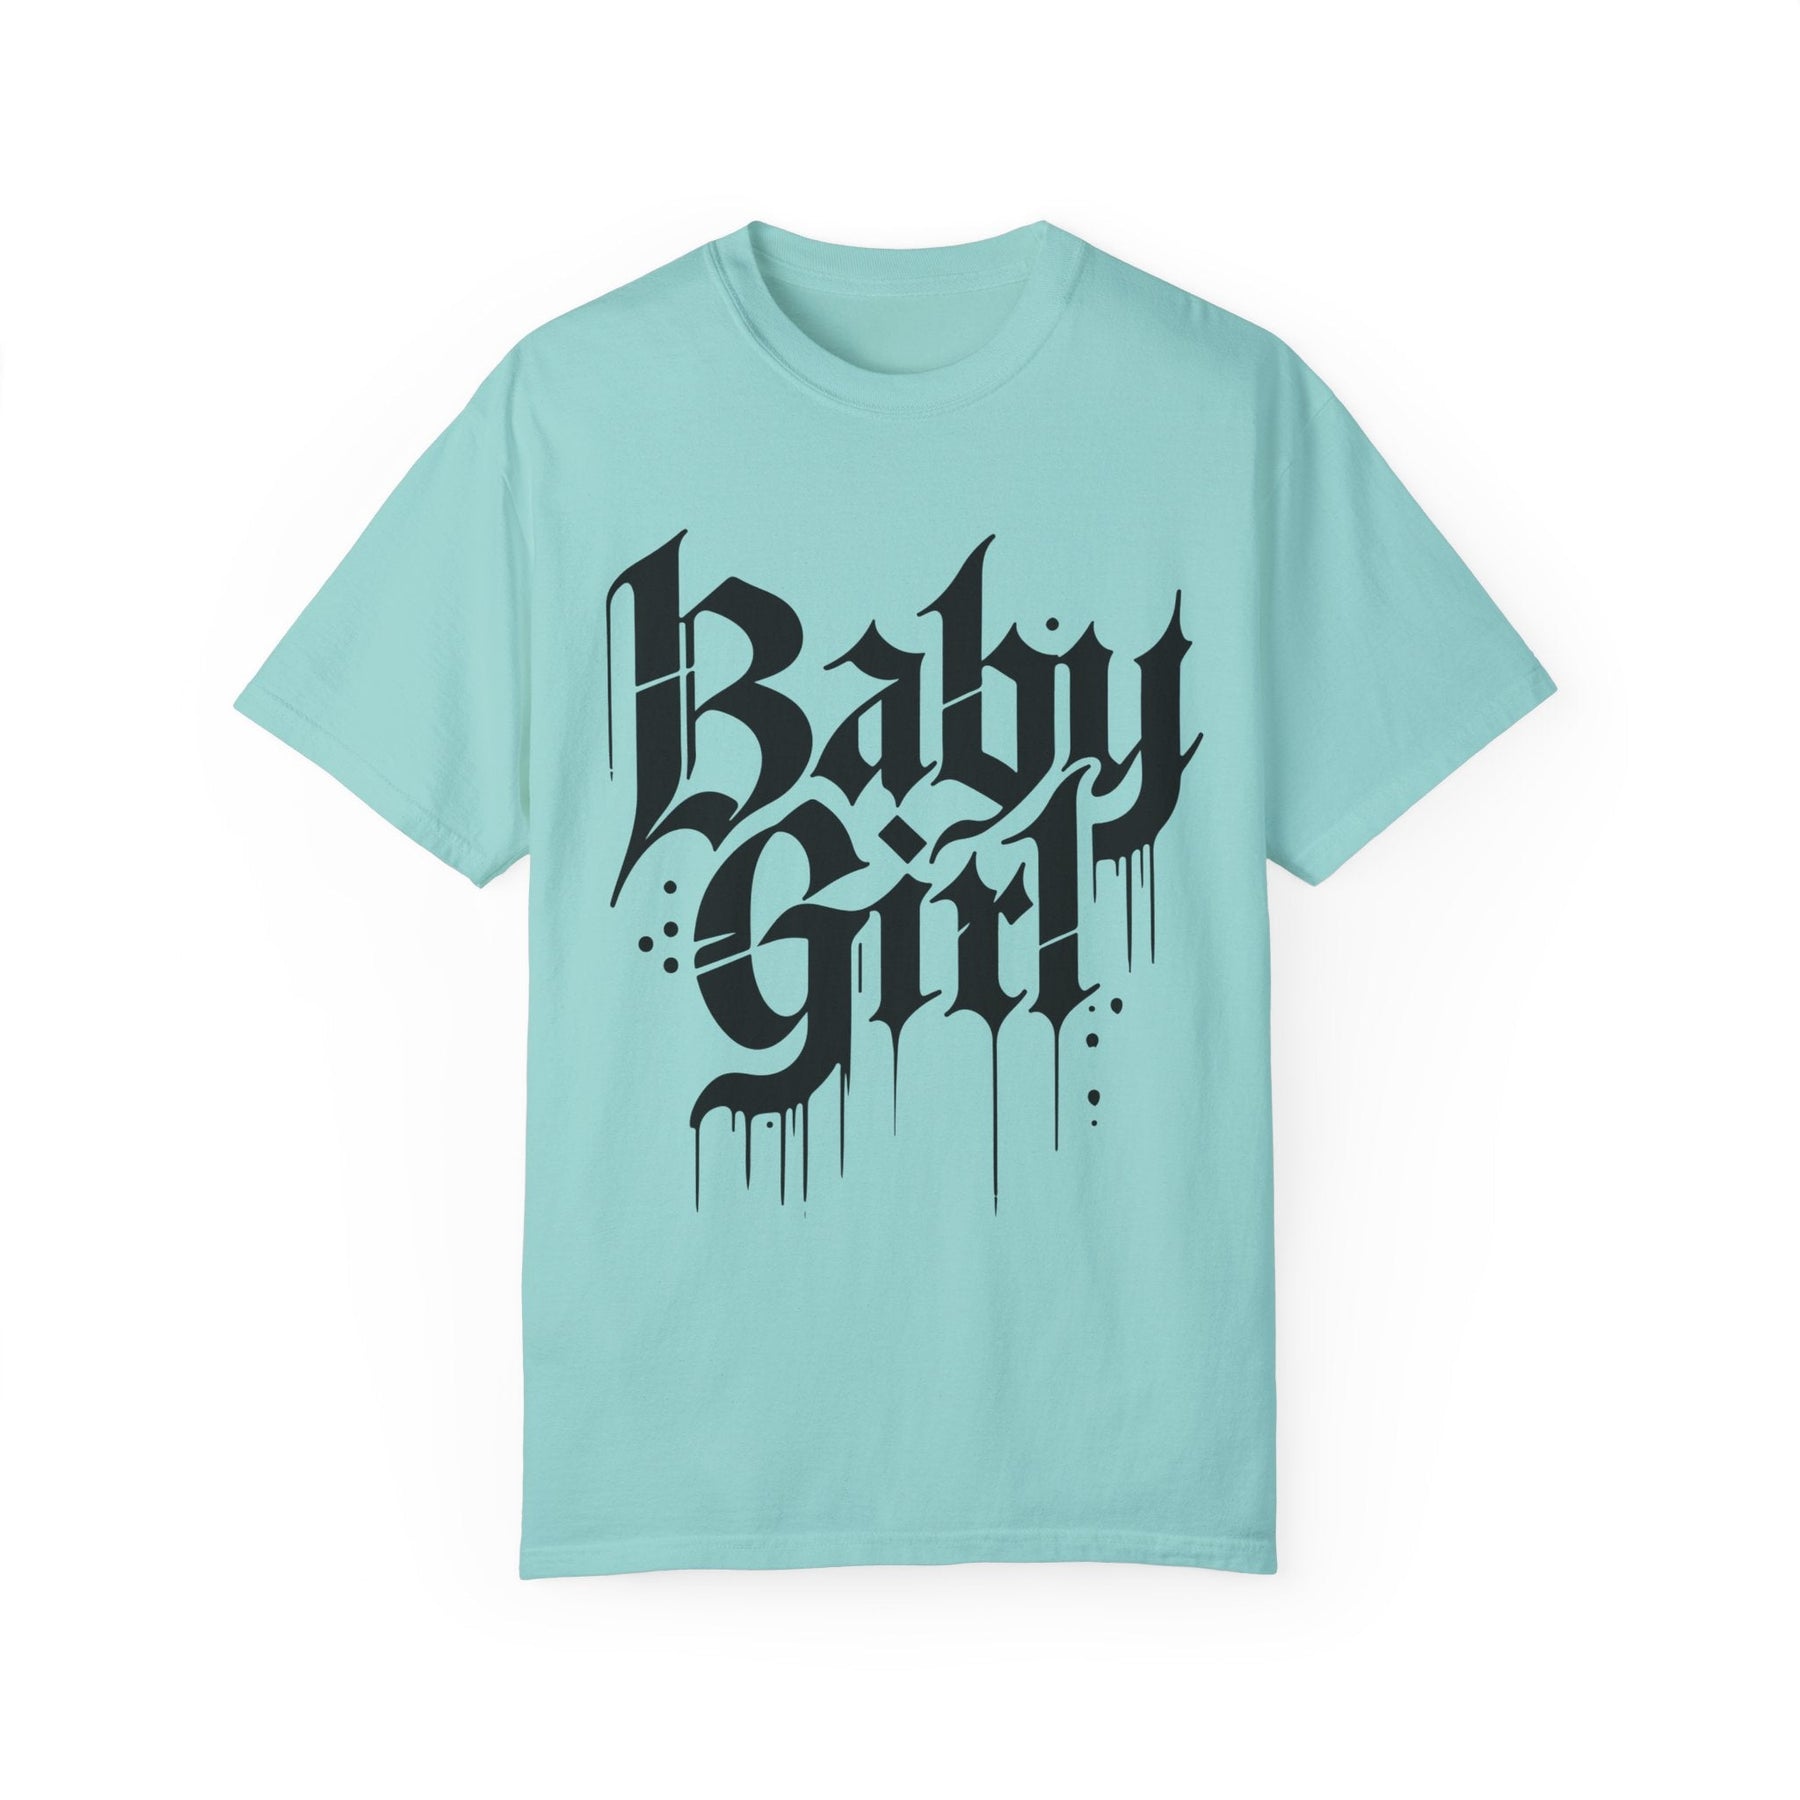 Baby Girl Comfort Tee - Goth Cloth Co.T - Shirt21057876505267560903